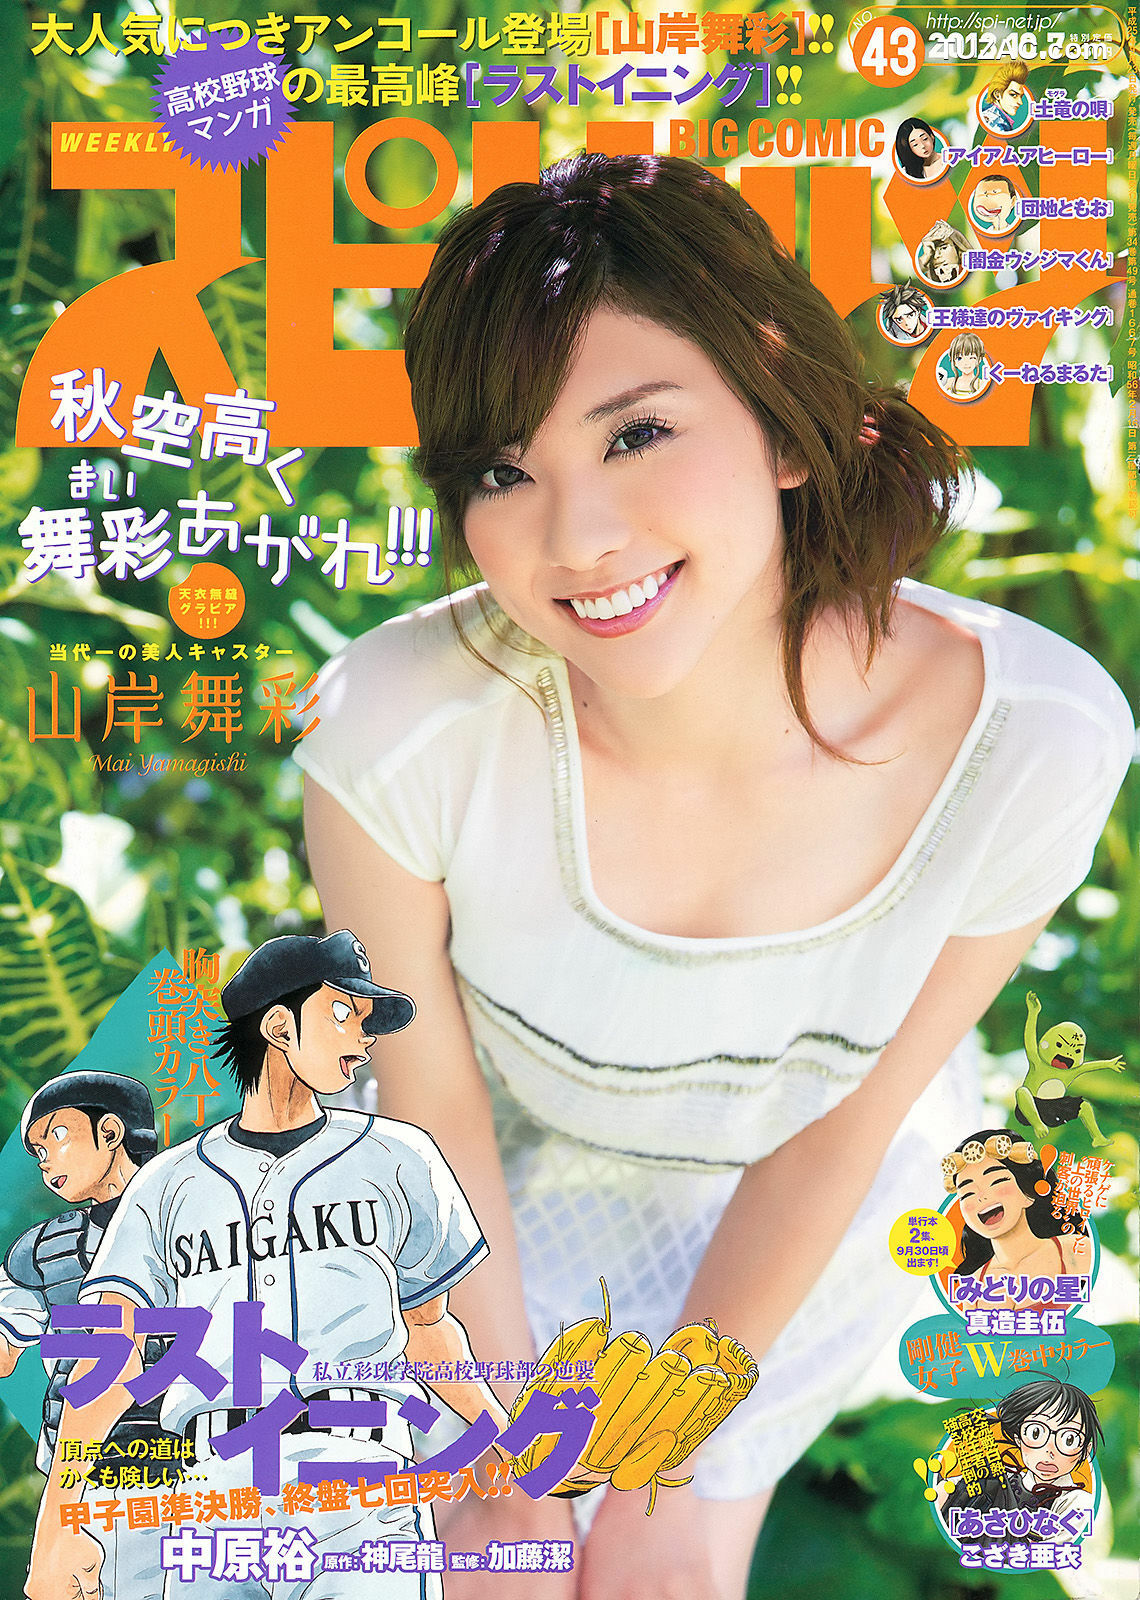 Weekly Big Comic Spirits杂志写真_ 山岸舞彩 2013年No.43 写真杂志[10P]